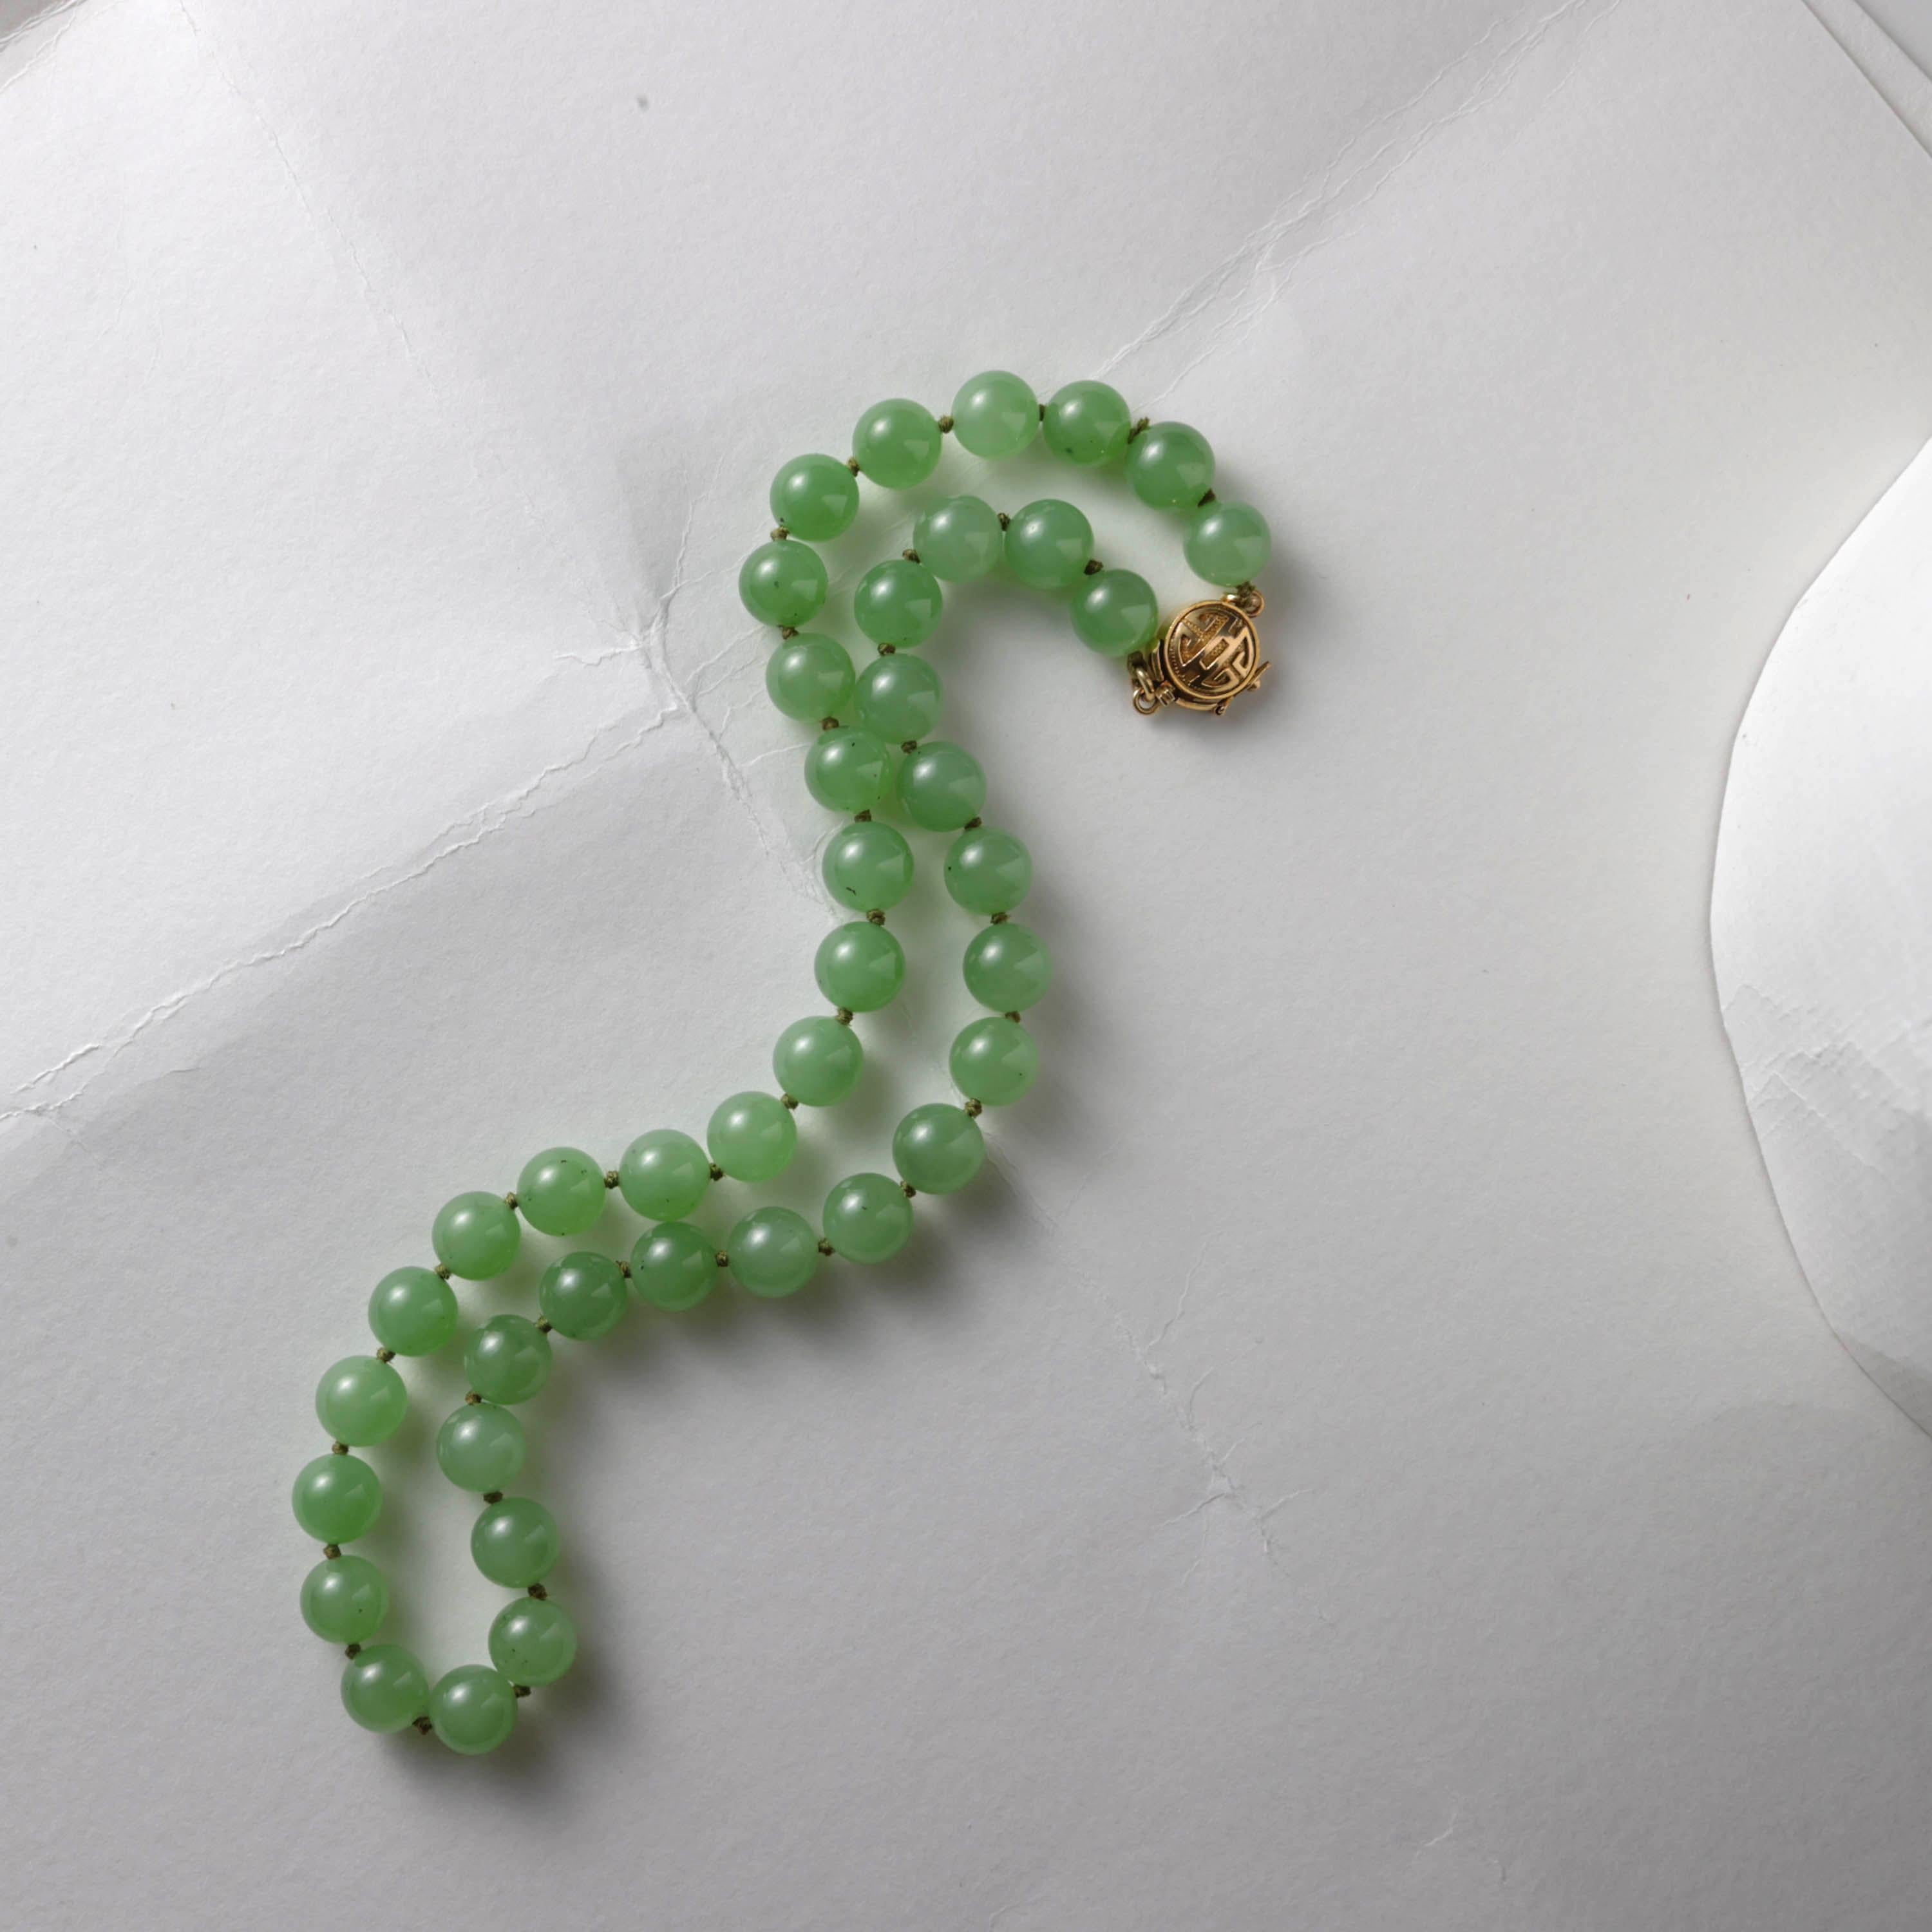 Rare Gump's Jade Necklace, Impossibly Translucent Nephrite 16 ¾